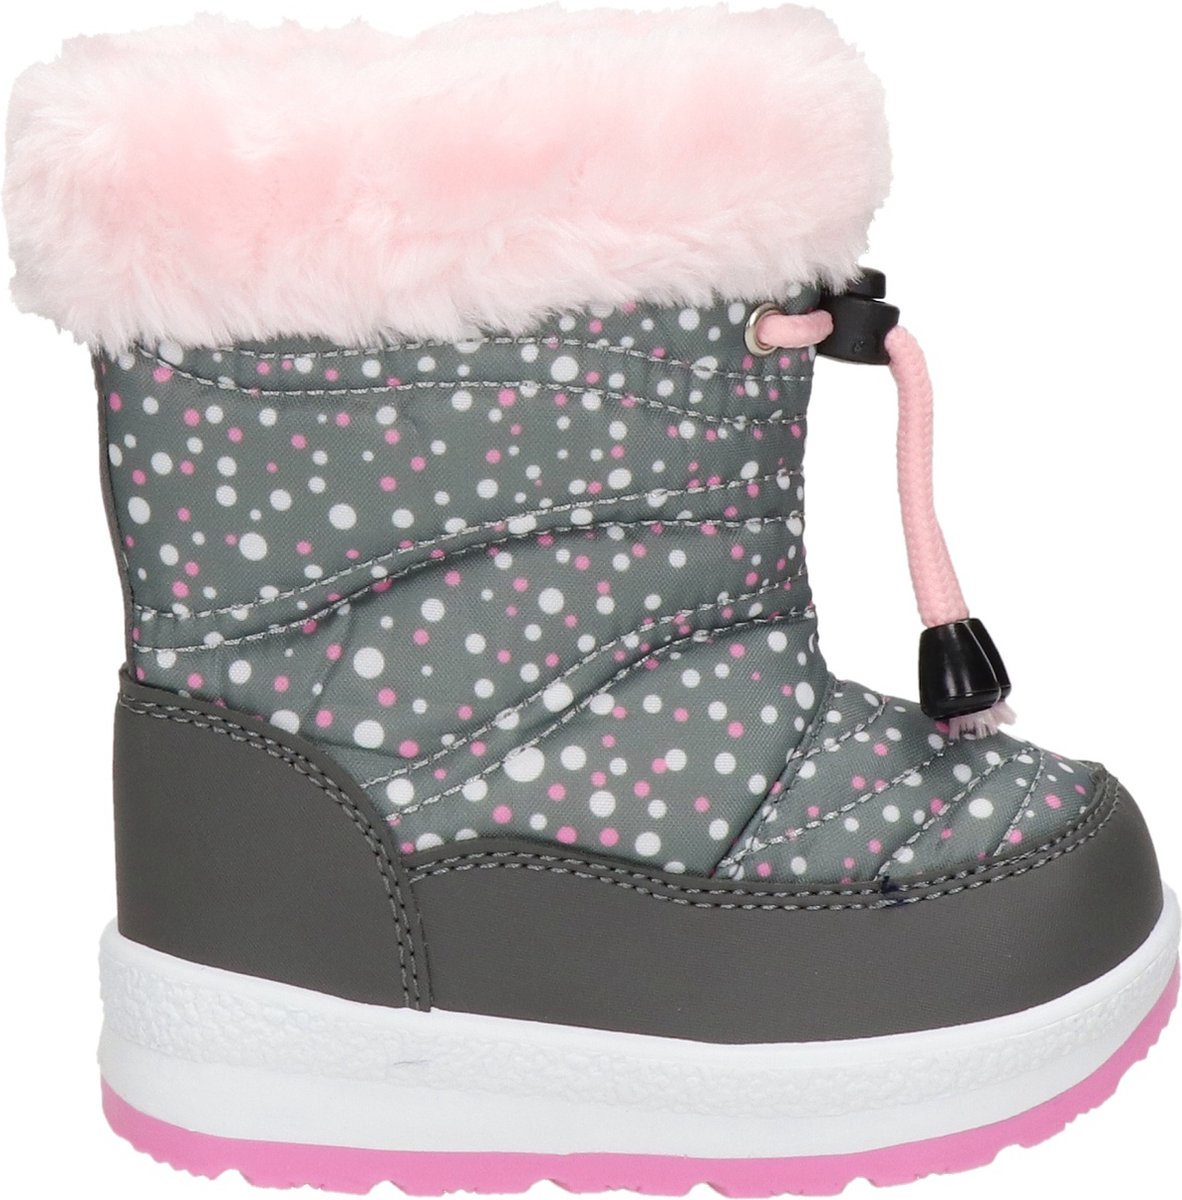 Snowfun Meisjes Snowboots - Roze - Maat 24